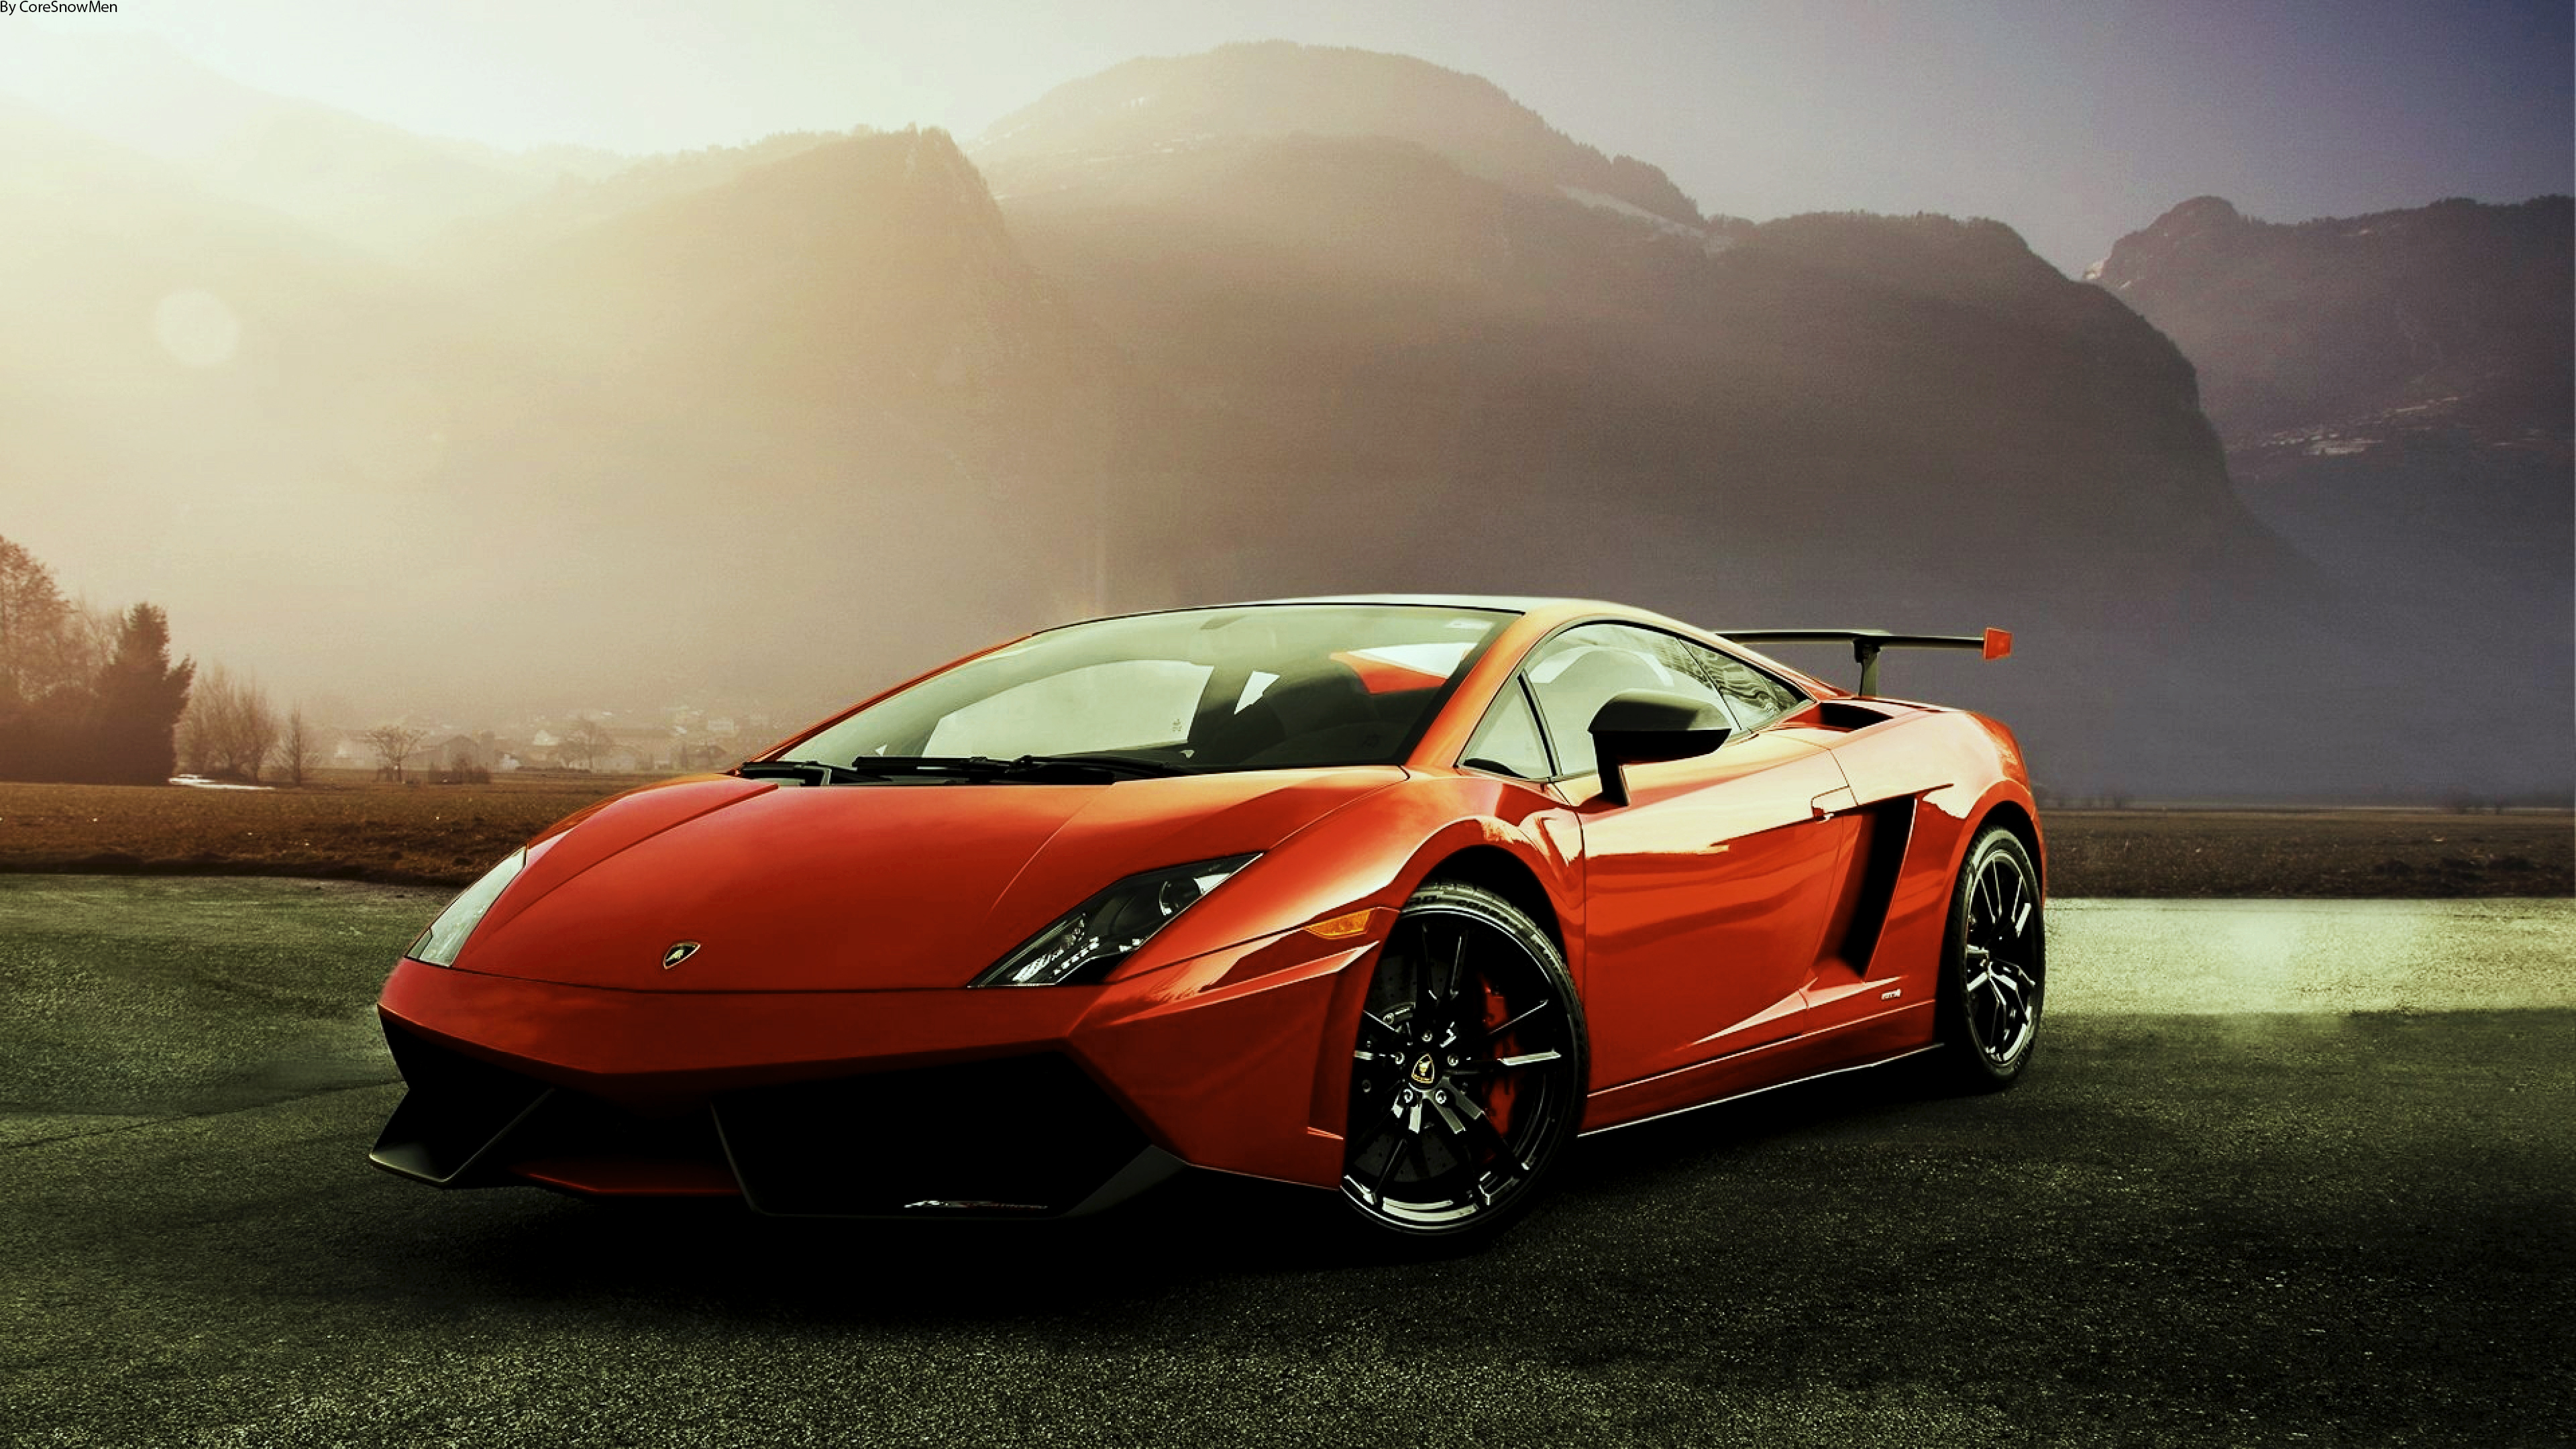 87 Lamborghini Gallardo HD Wallpapers | Backgrounds ...